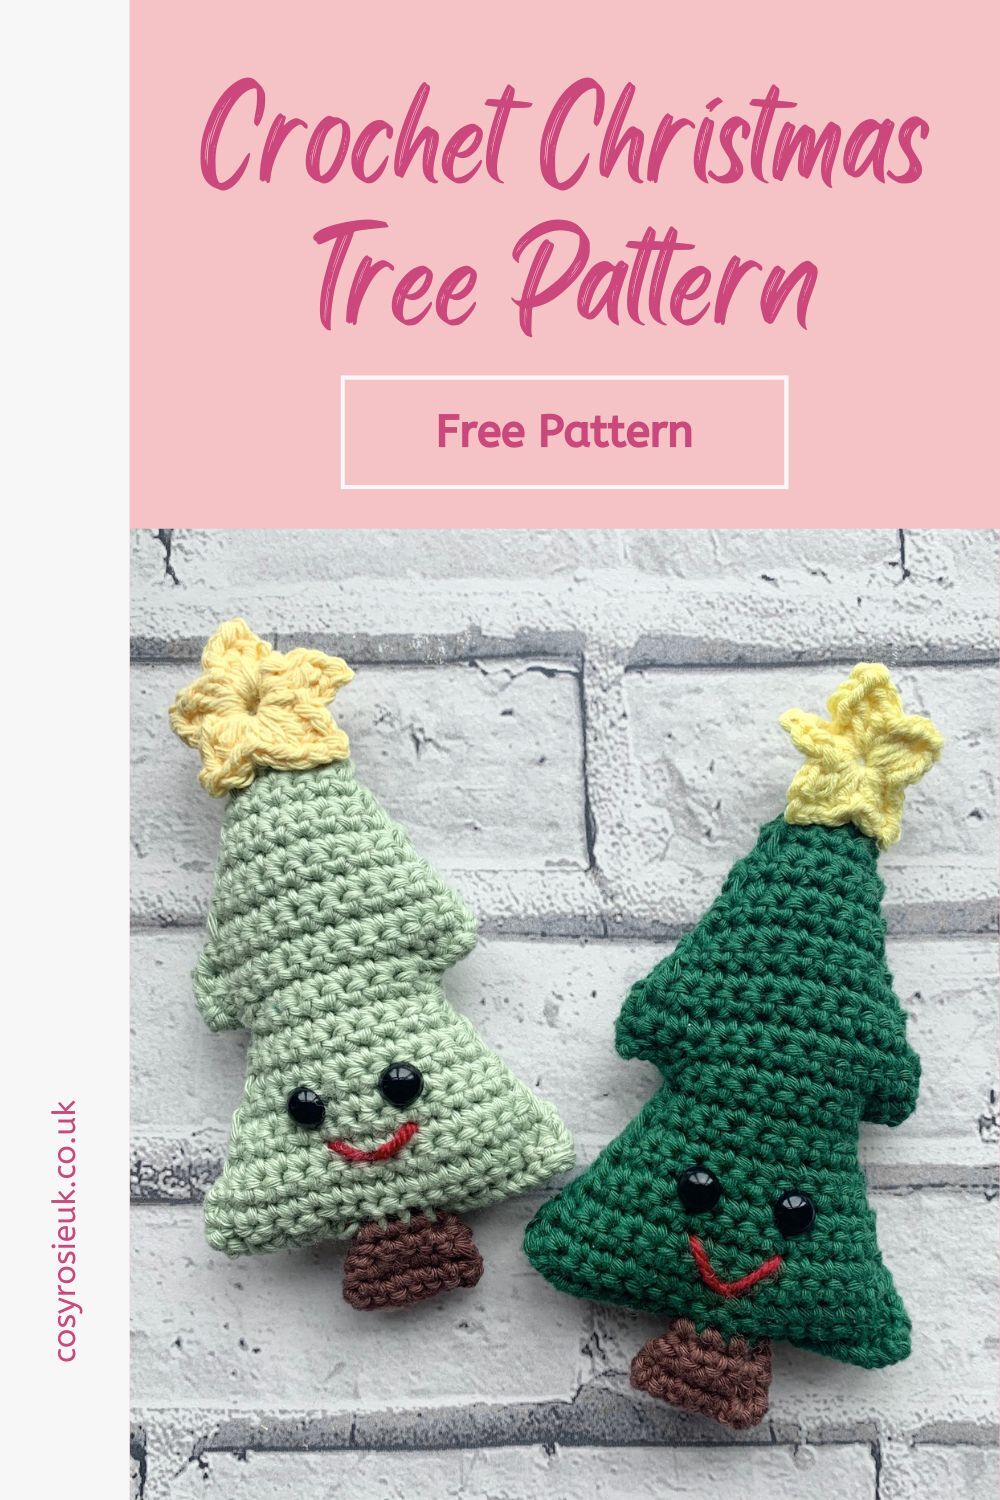 Learn How to crochet a Christmas tree